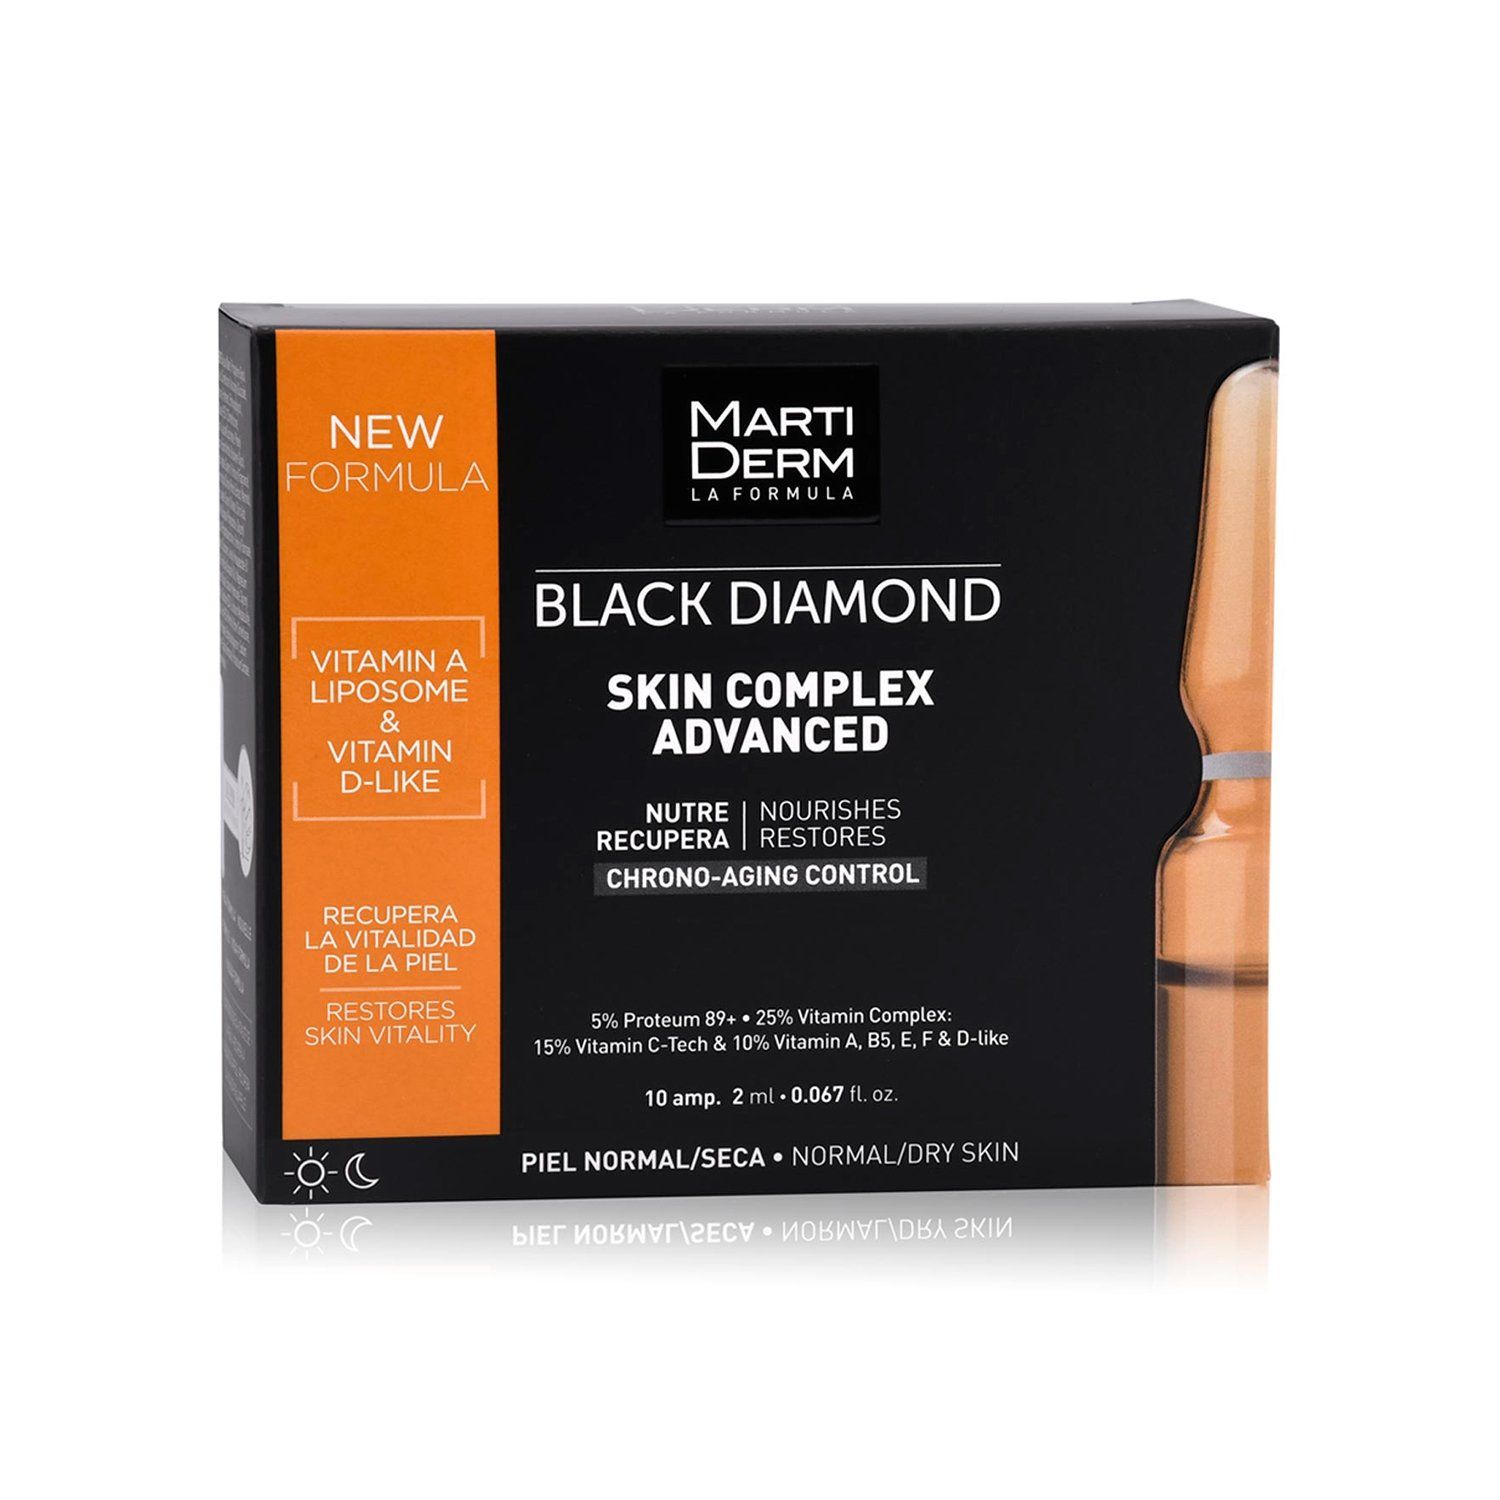  Ampoule Chống Oxy Hoá, Trẻ Hóa & Làm Sáng Da 5% Proteum 89+, 15% Vitamin C-Tech - MartiDerm Black Diamond Skin Complex Advanced 